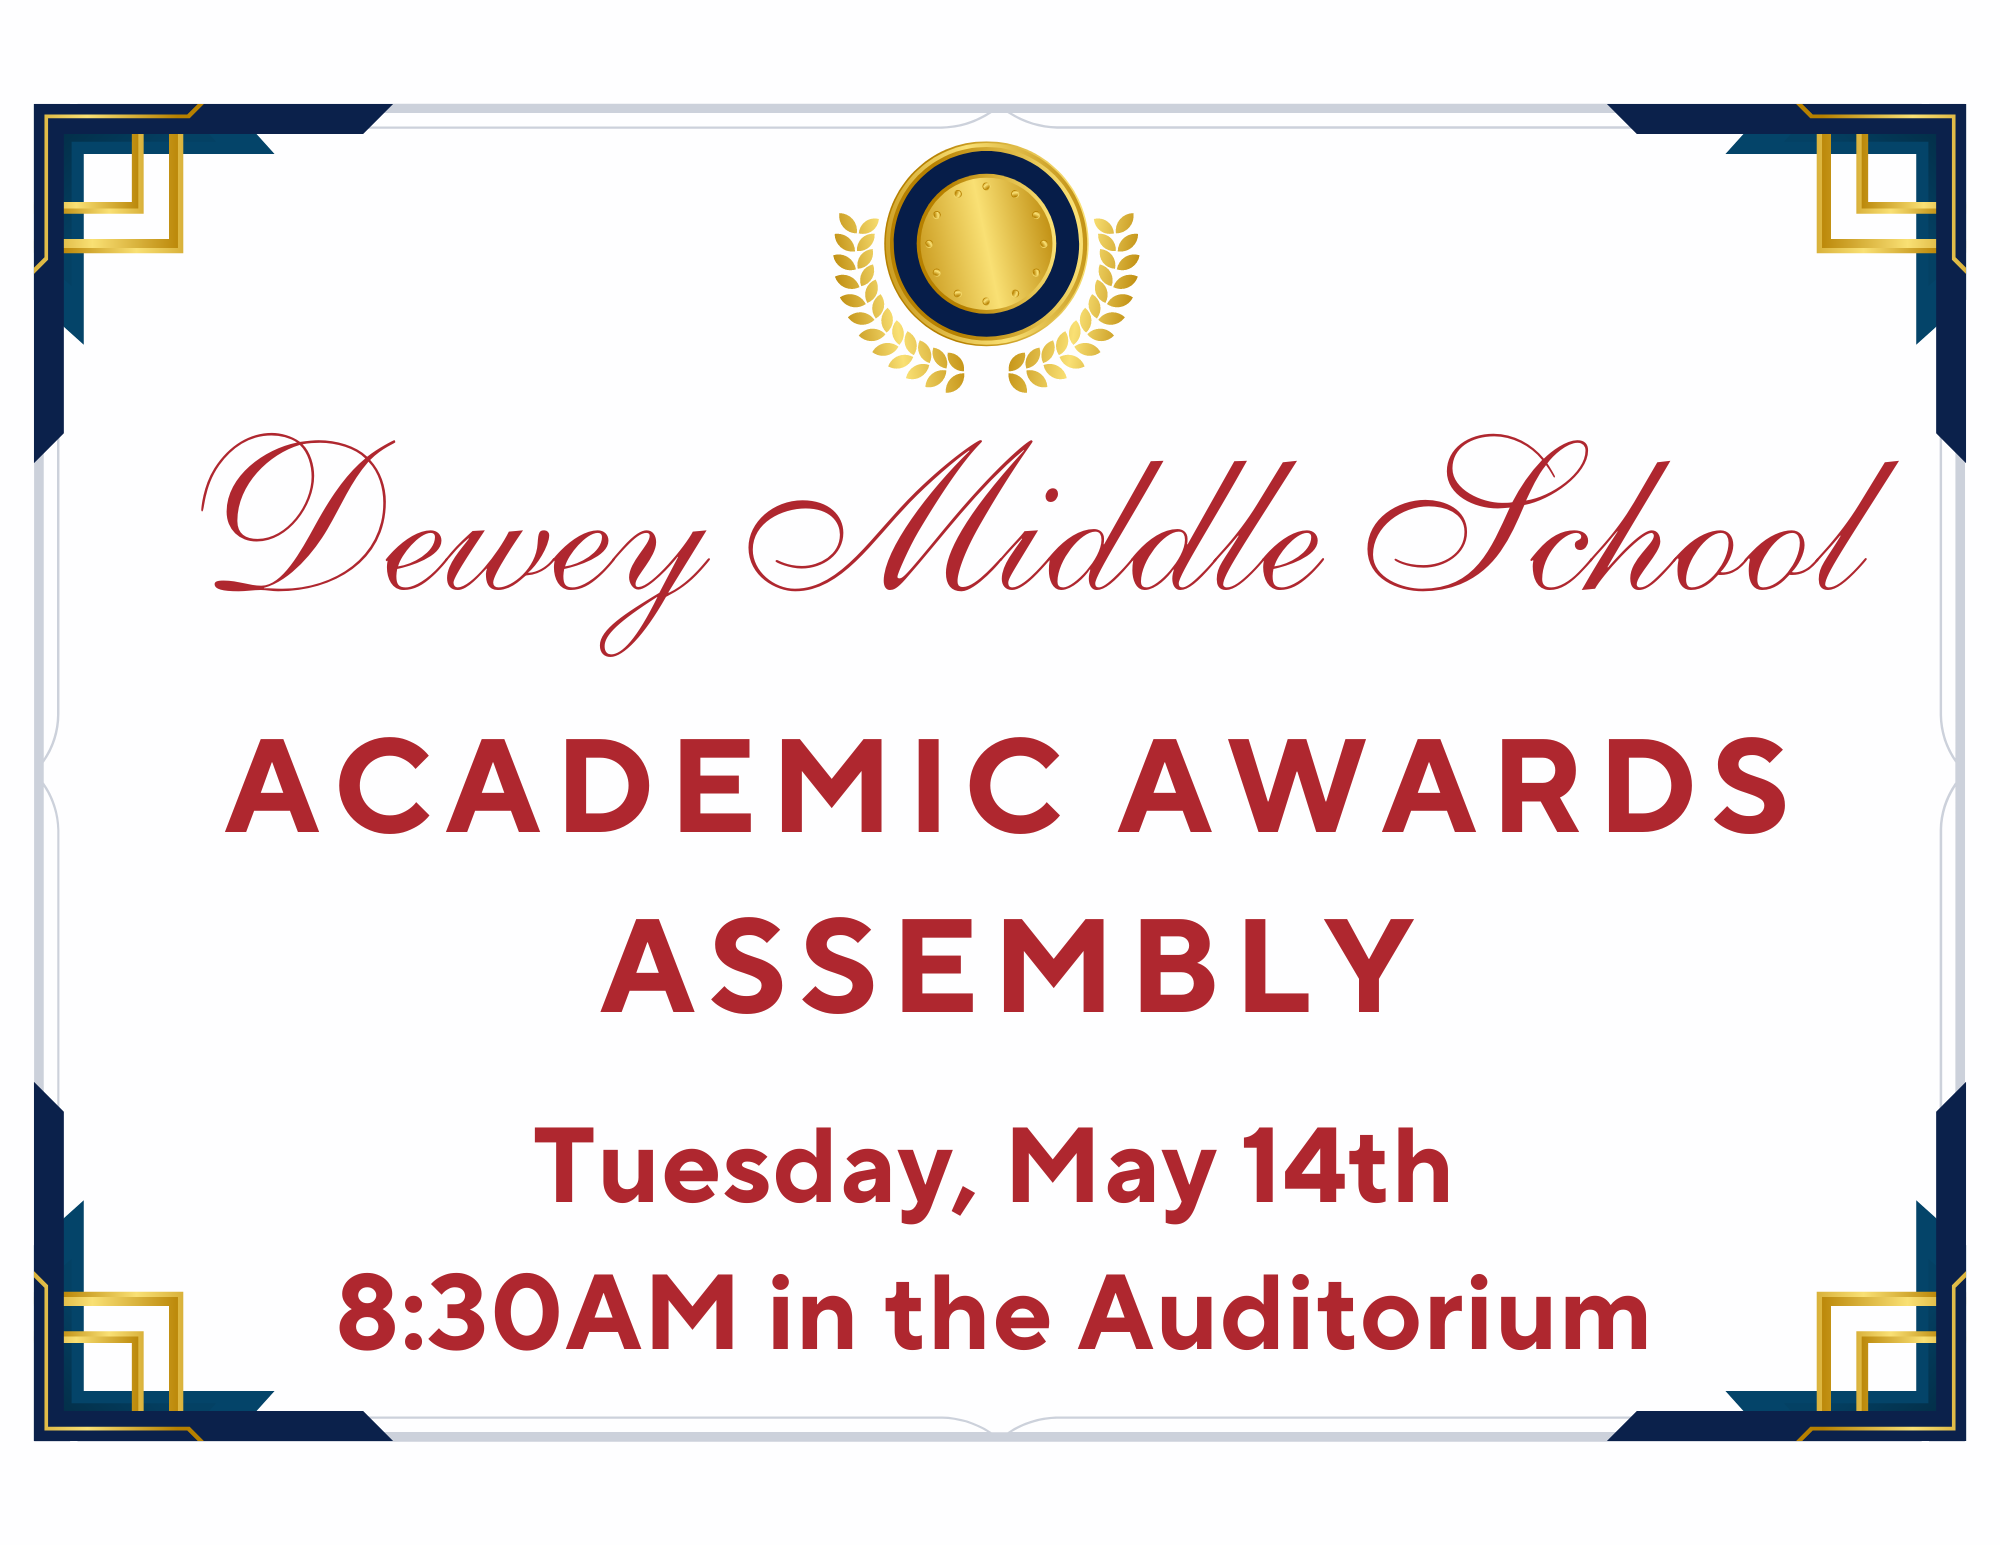 Awards assembly